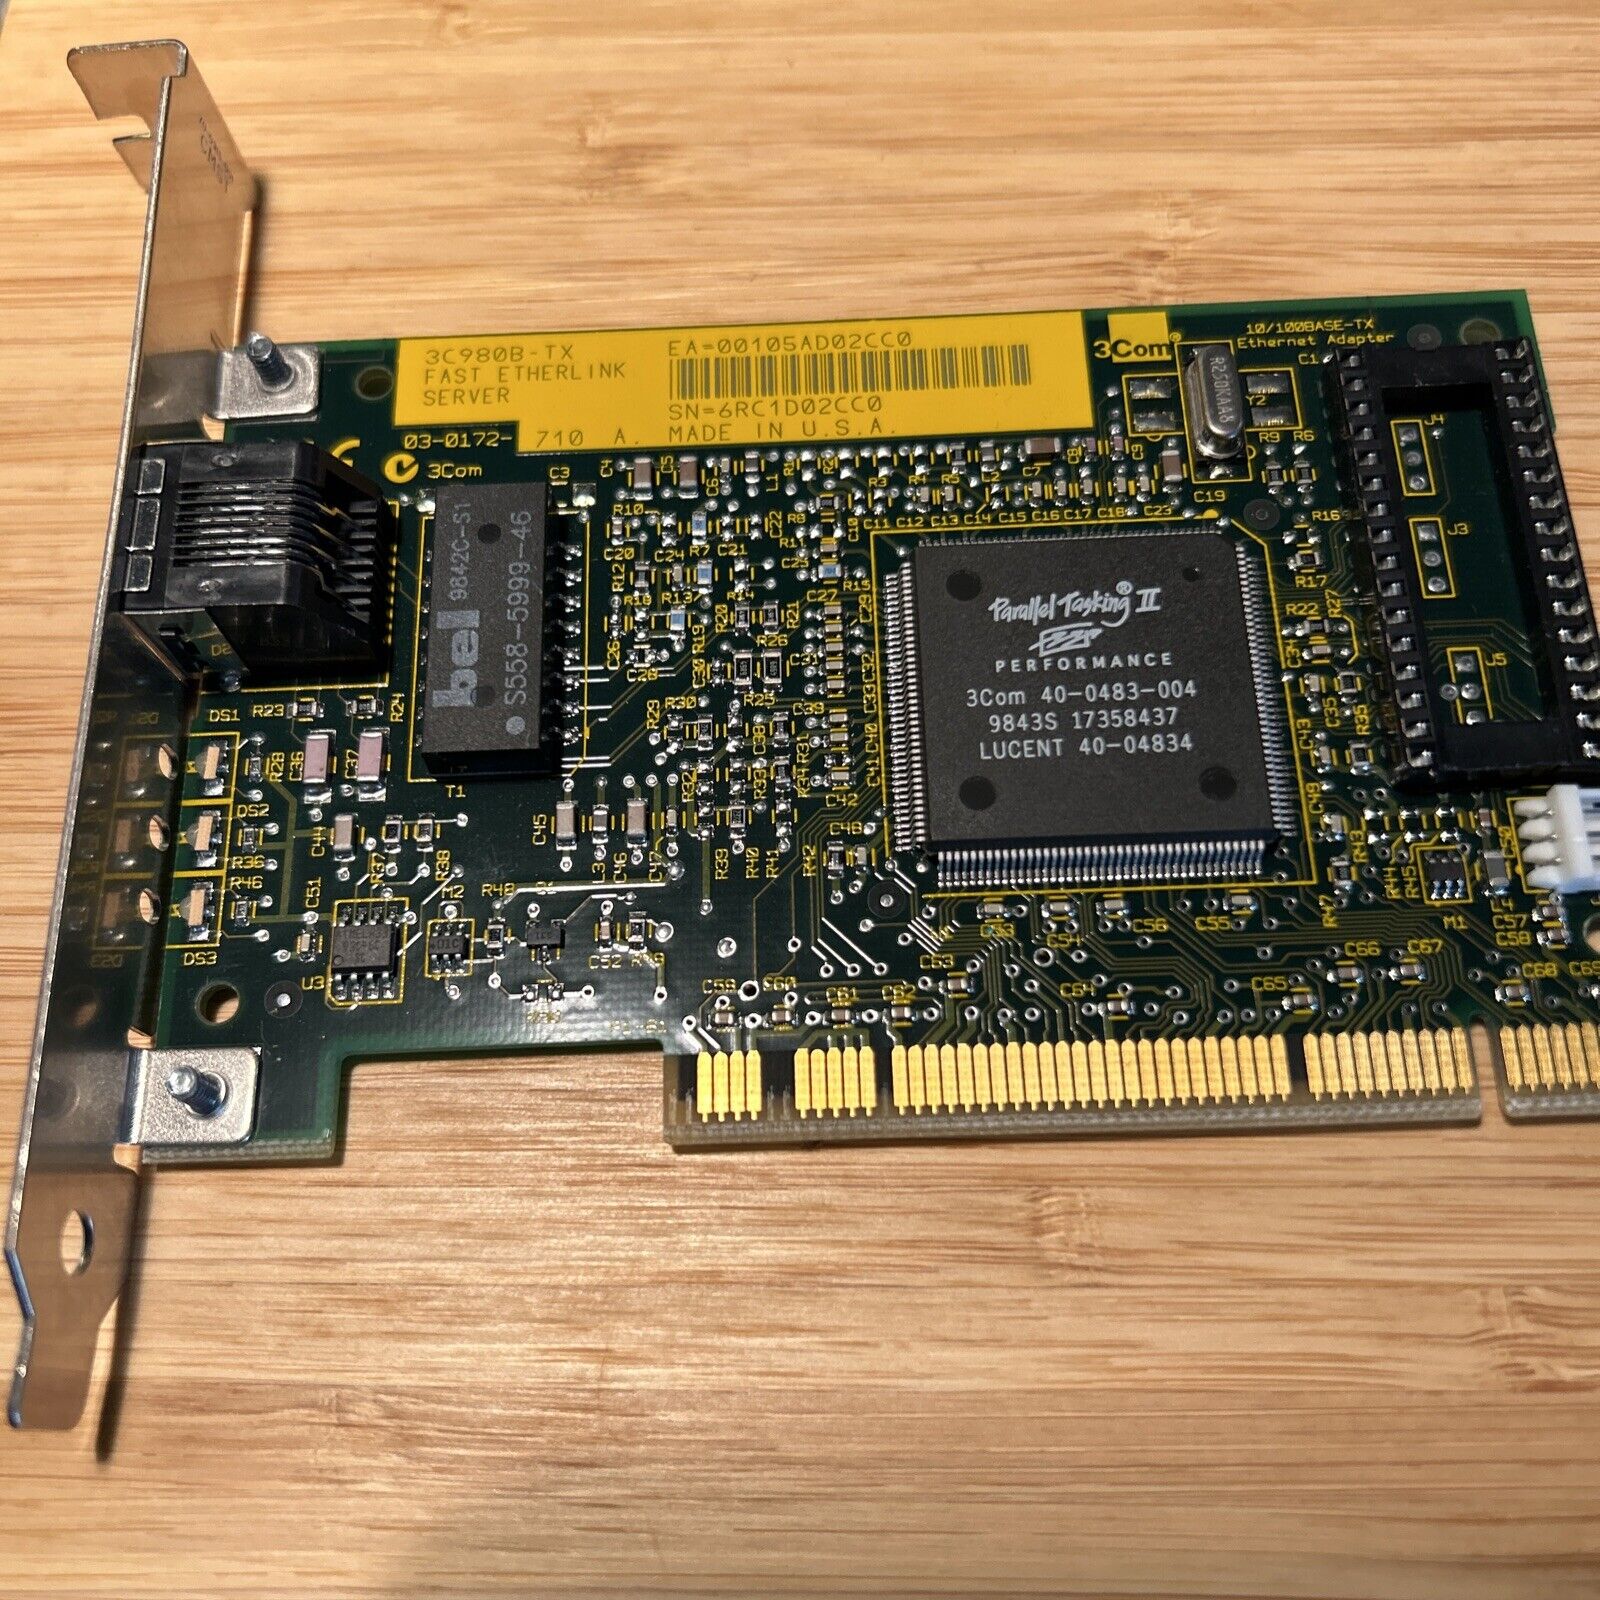 3COM 3C980-TX FAST ETHERLINK PCI 10/100 ETHERNET NETWORK Parallel Tasking II